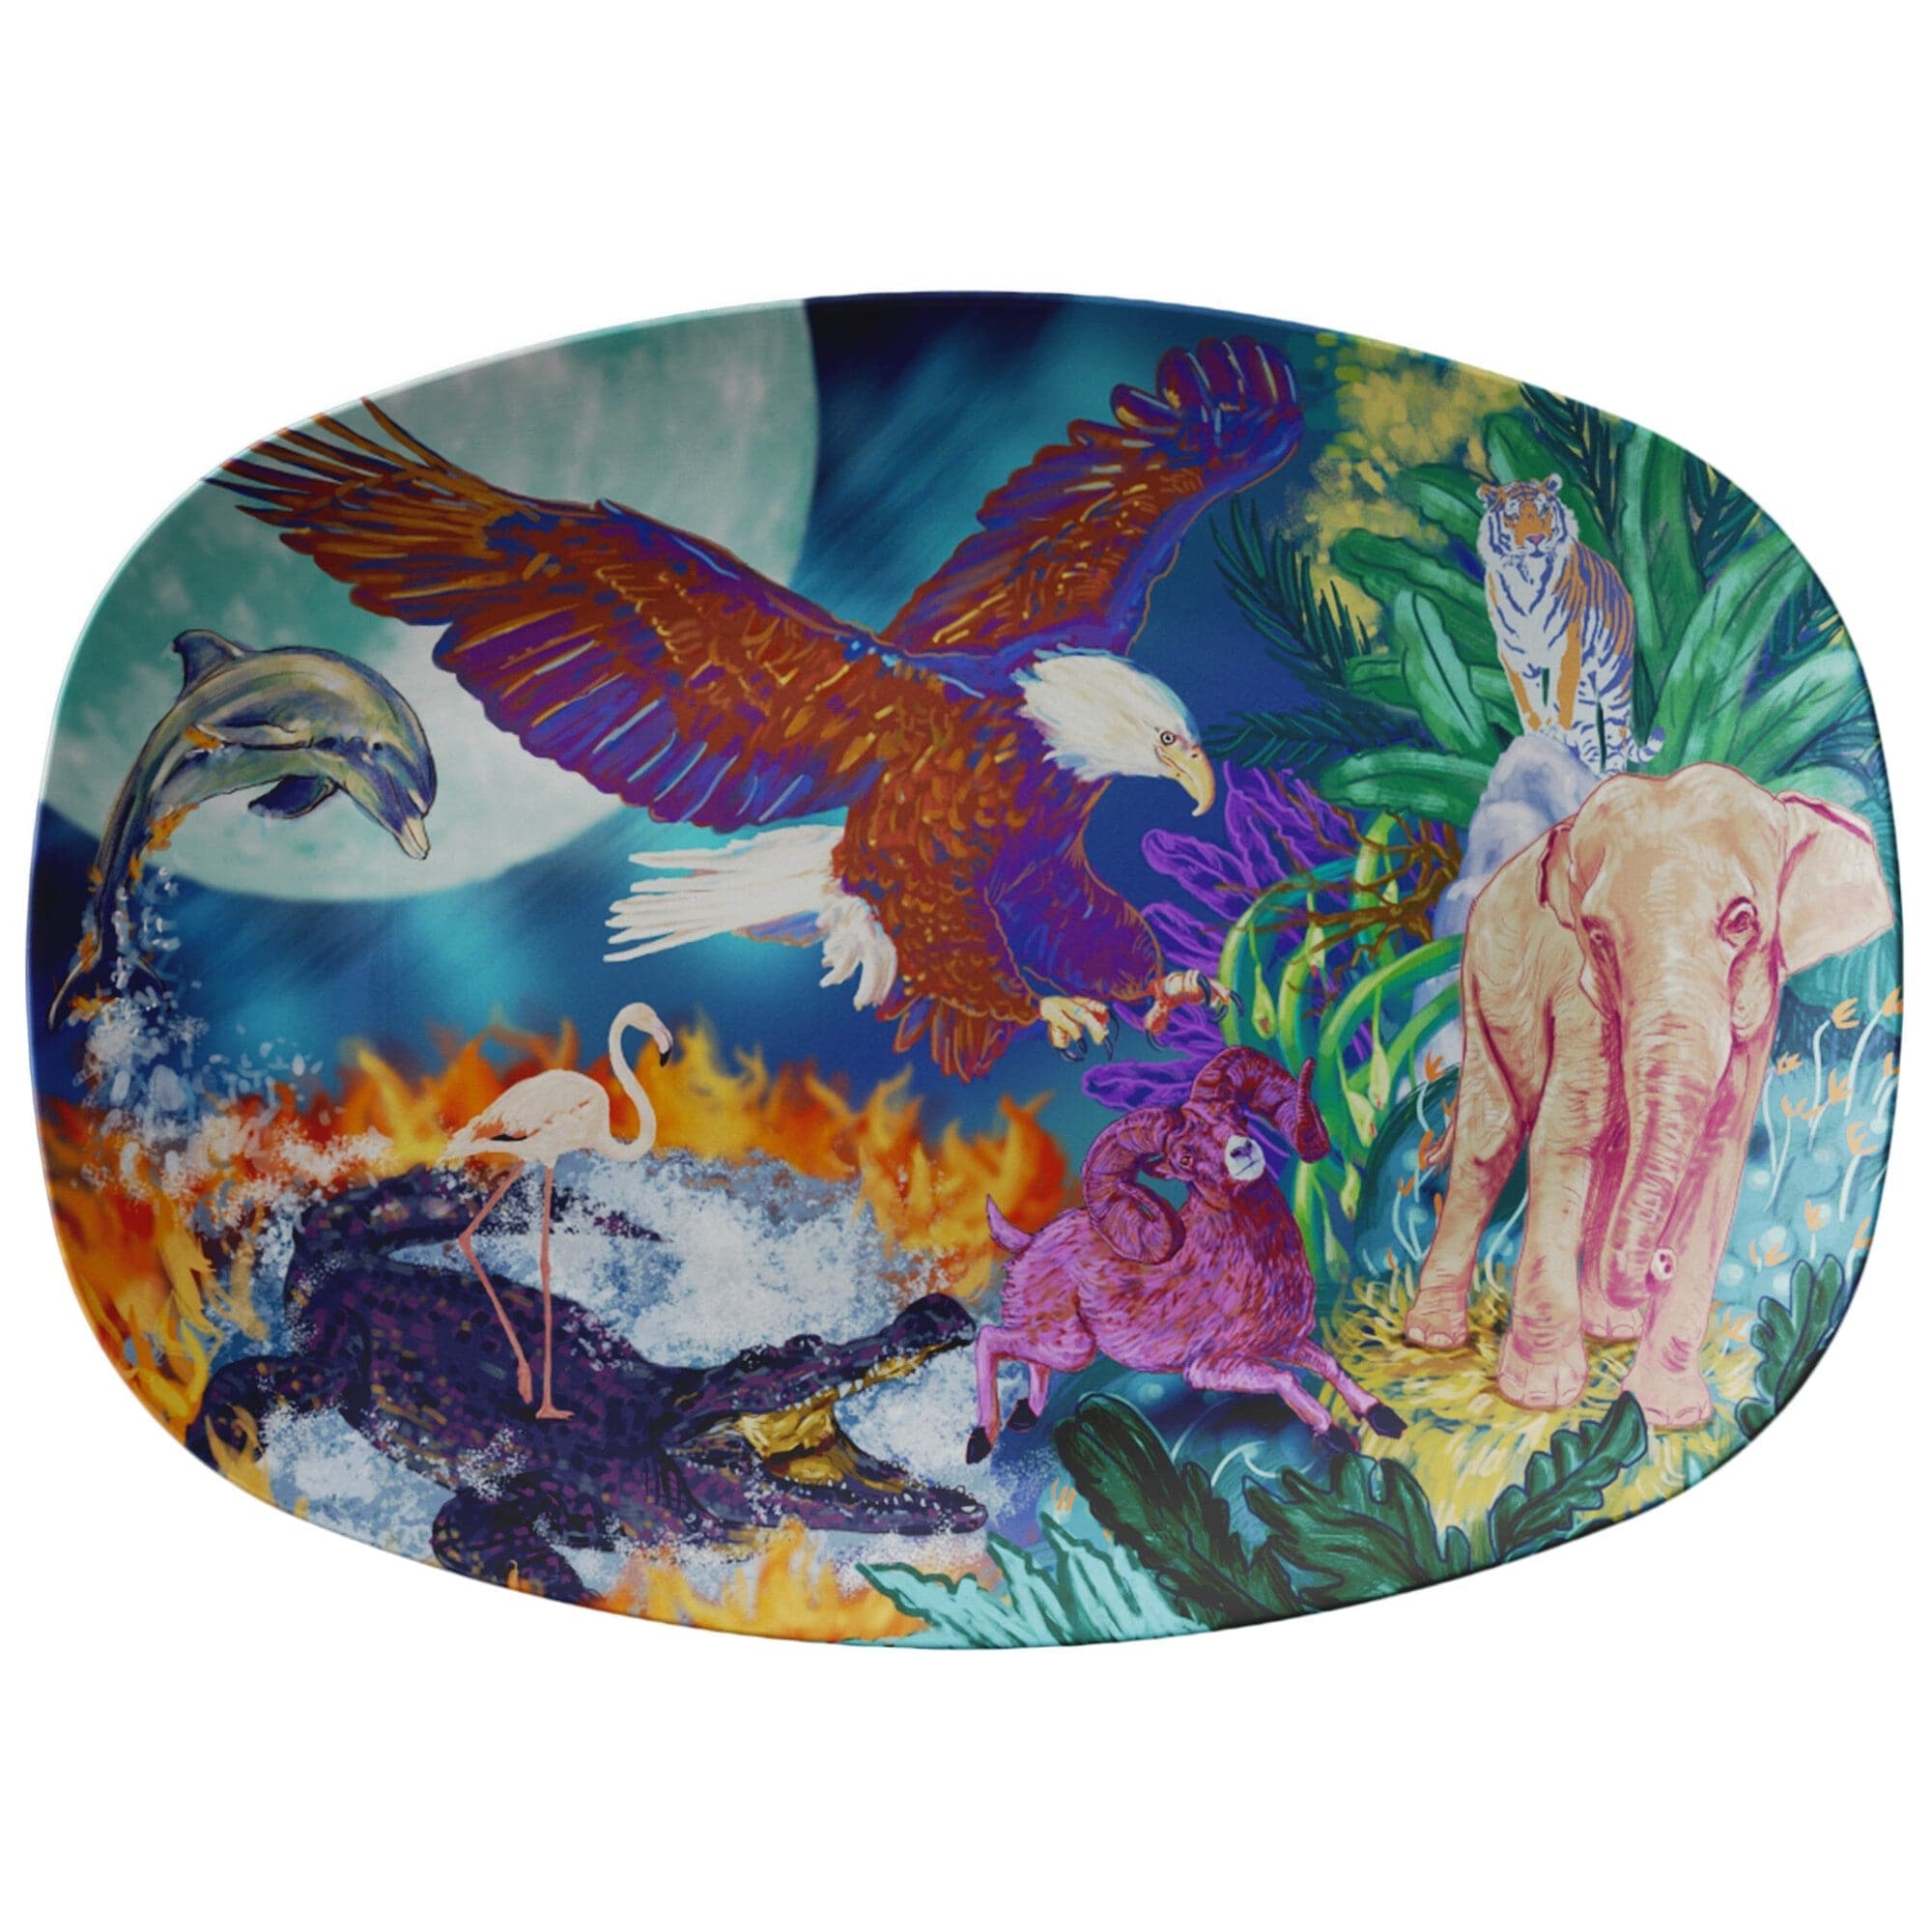 Kate McEnroe New York Serving Platter in Wildlife Fantasy ArtServing Platters9727